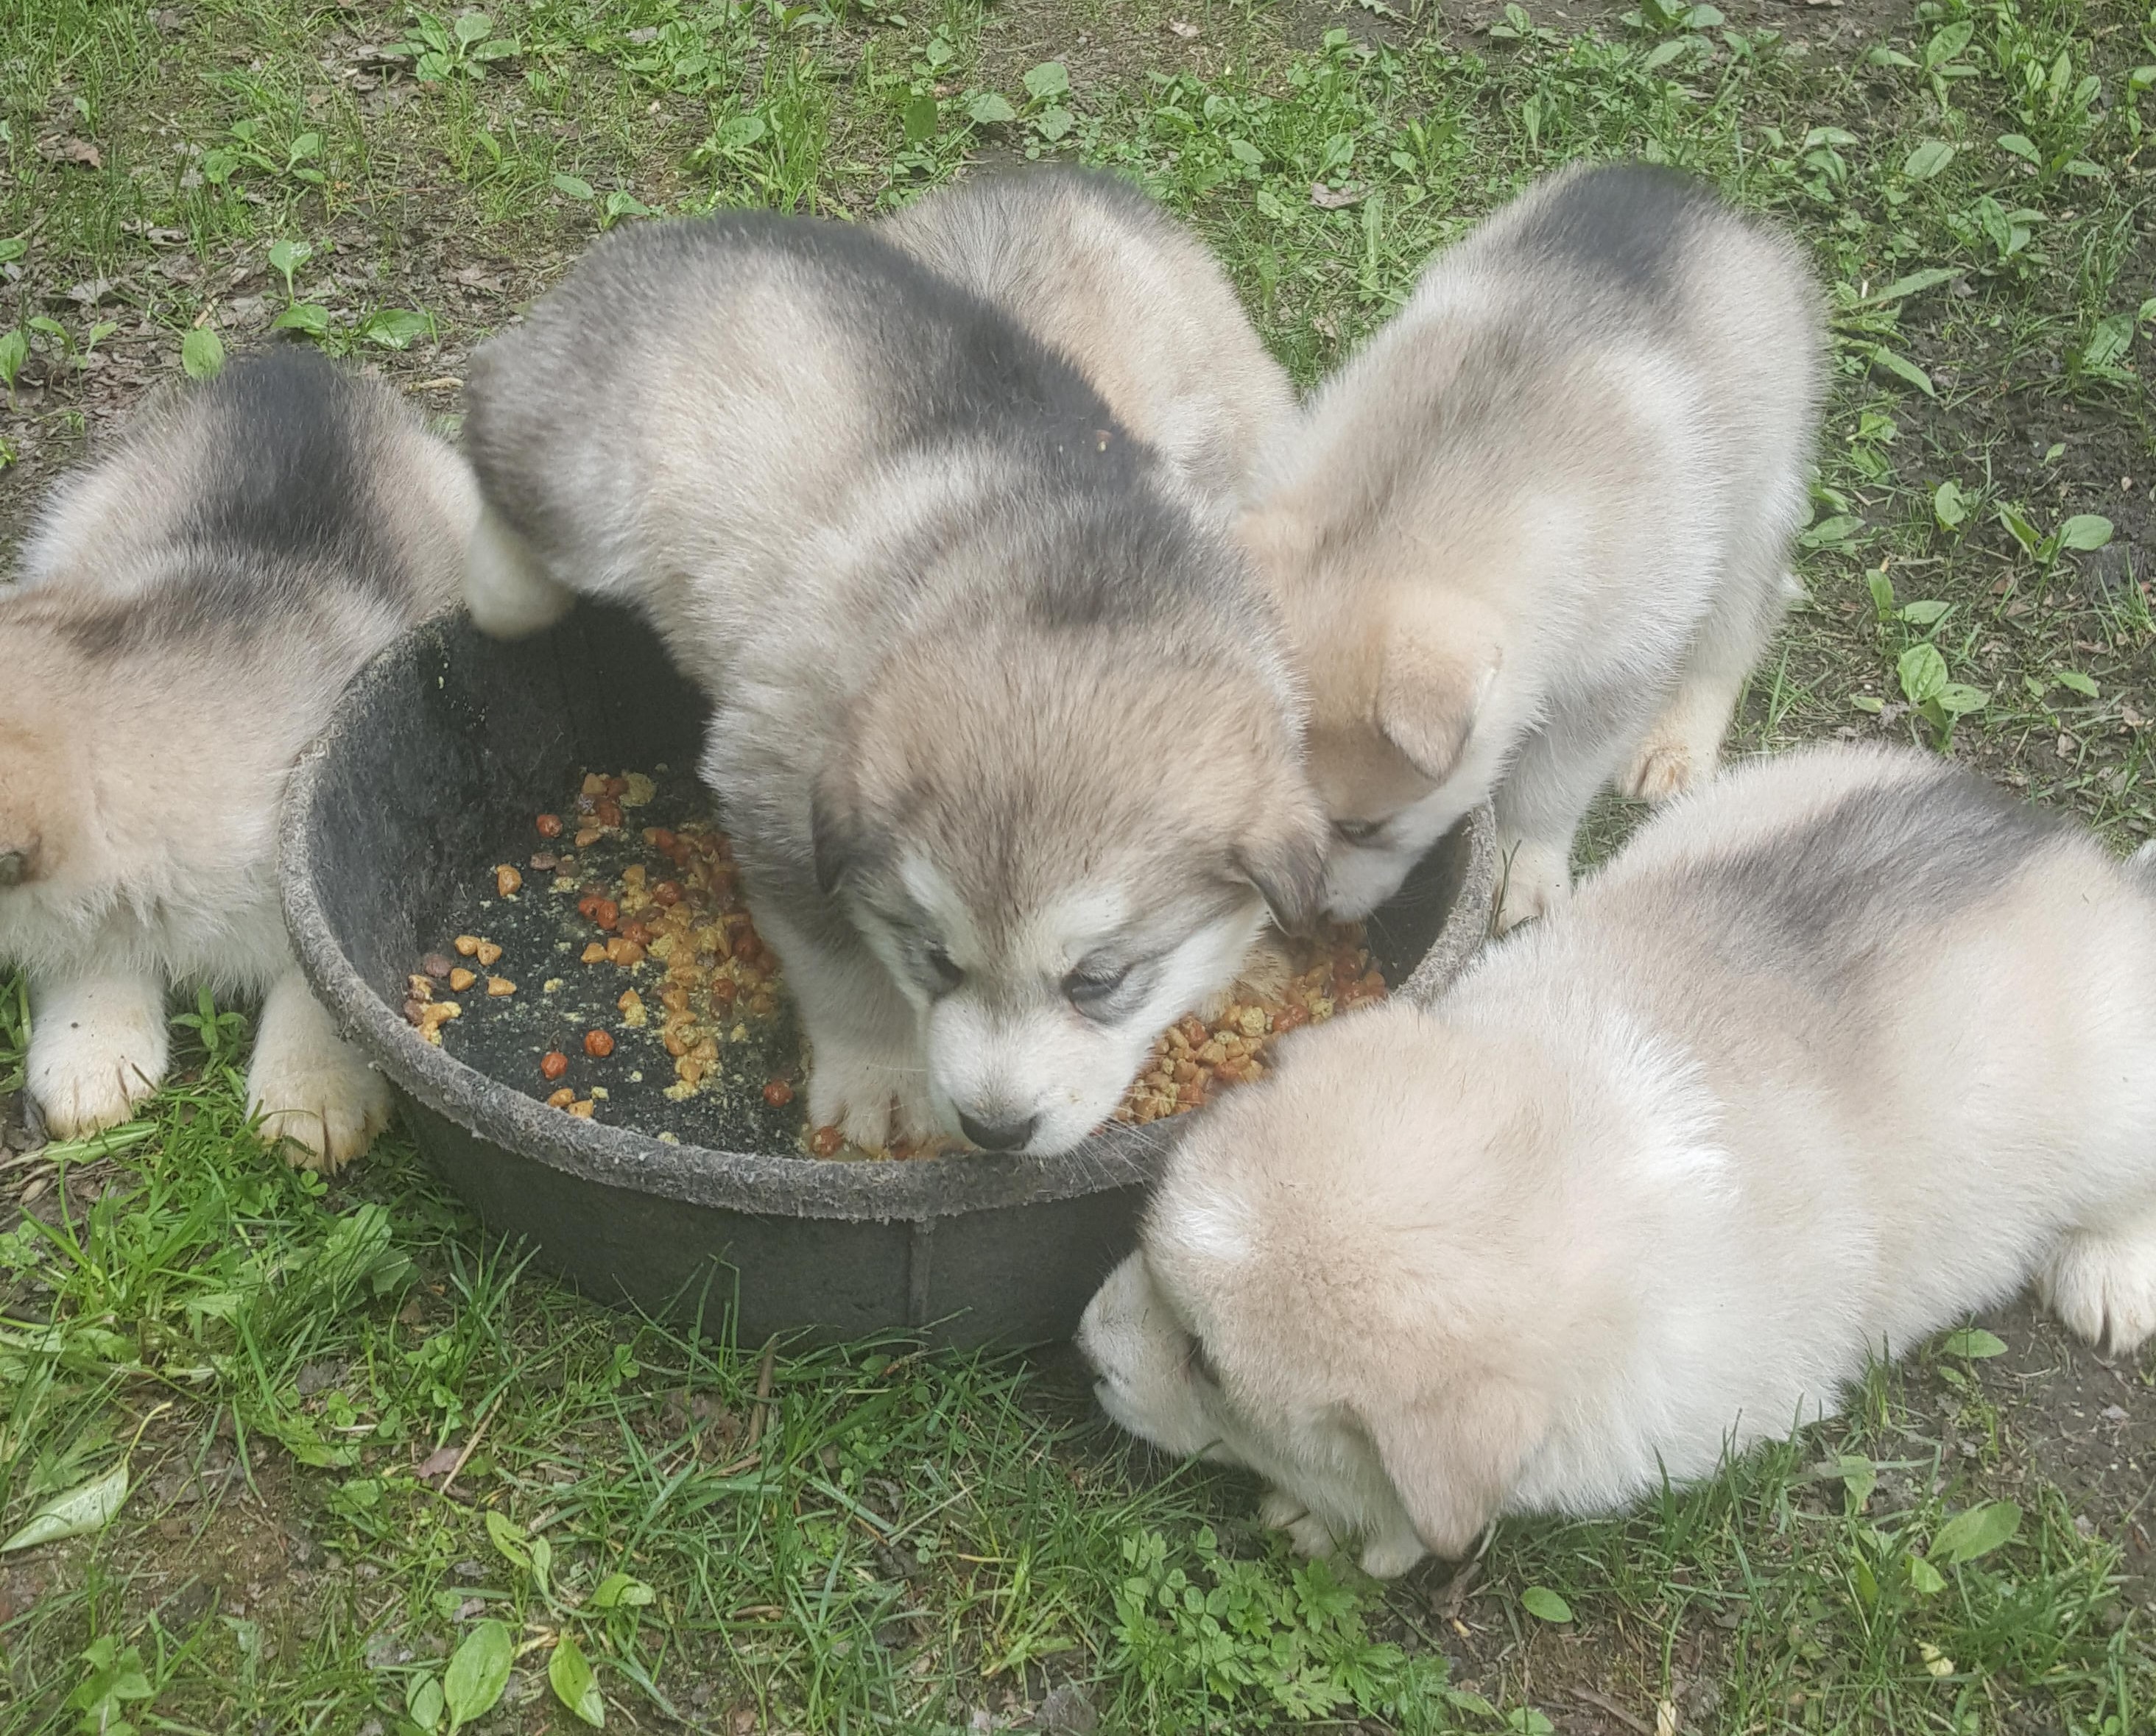 Malamute Puppies eating